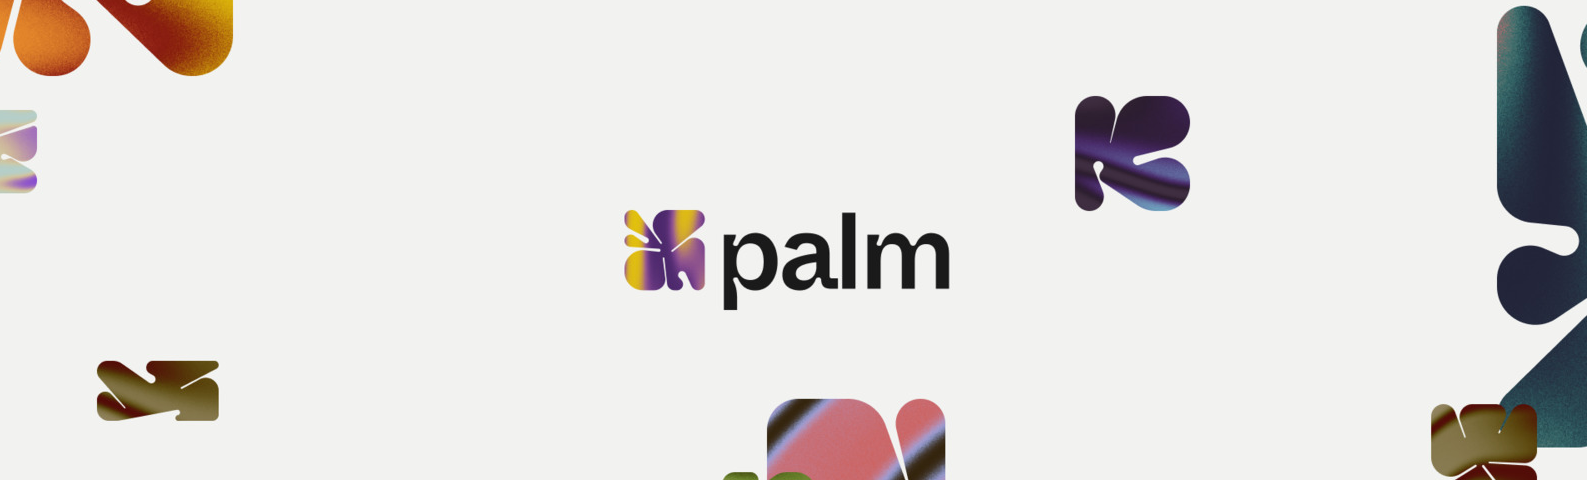 Palm blockchain logo.